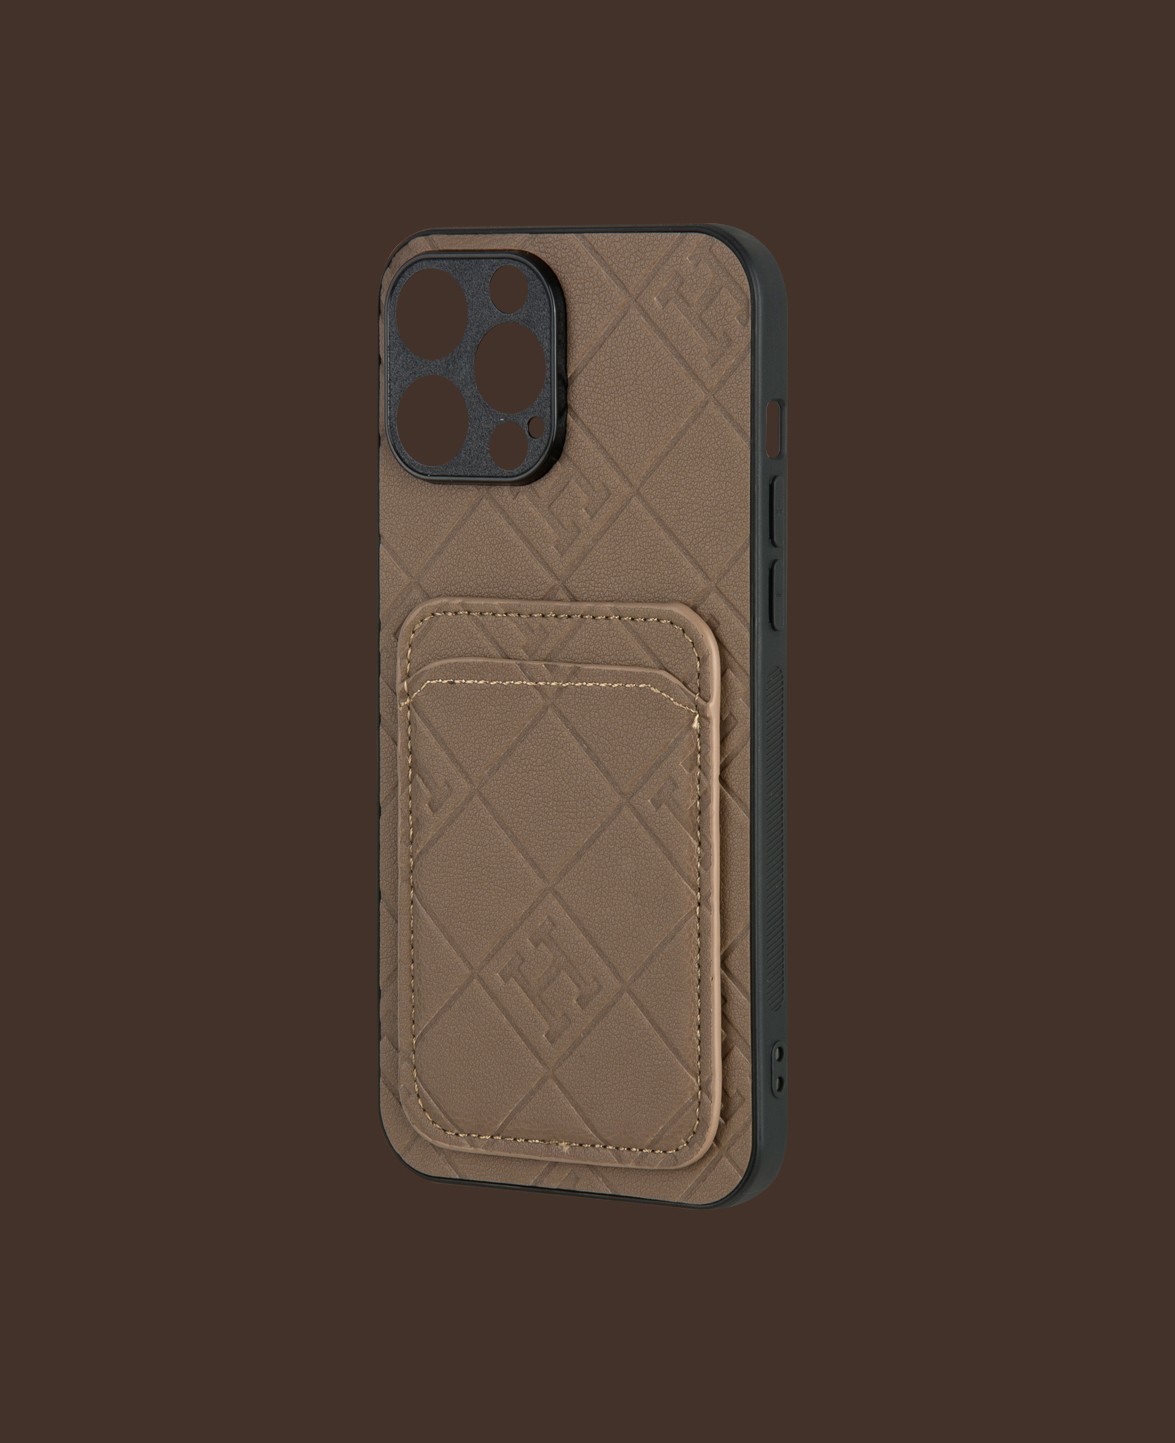 Mink Card Holder Phone Case - DK154 - iPhone 11 ProMax